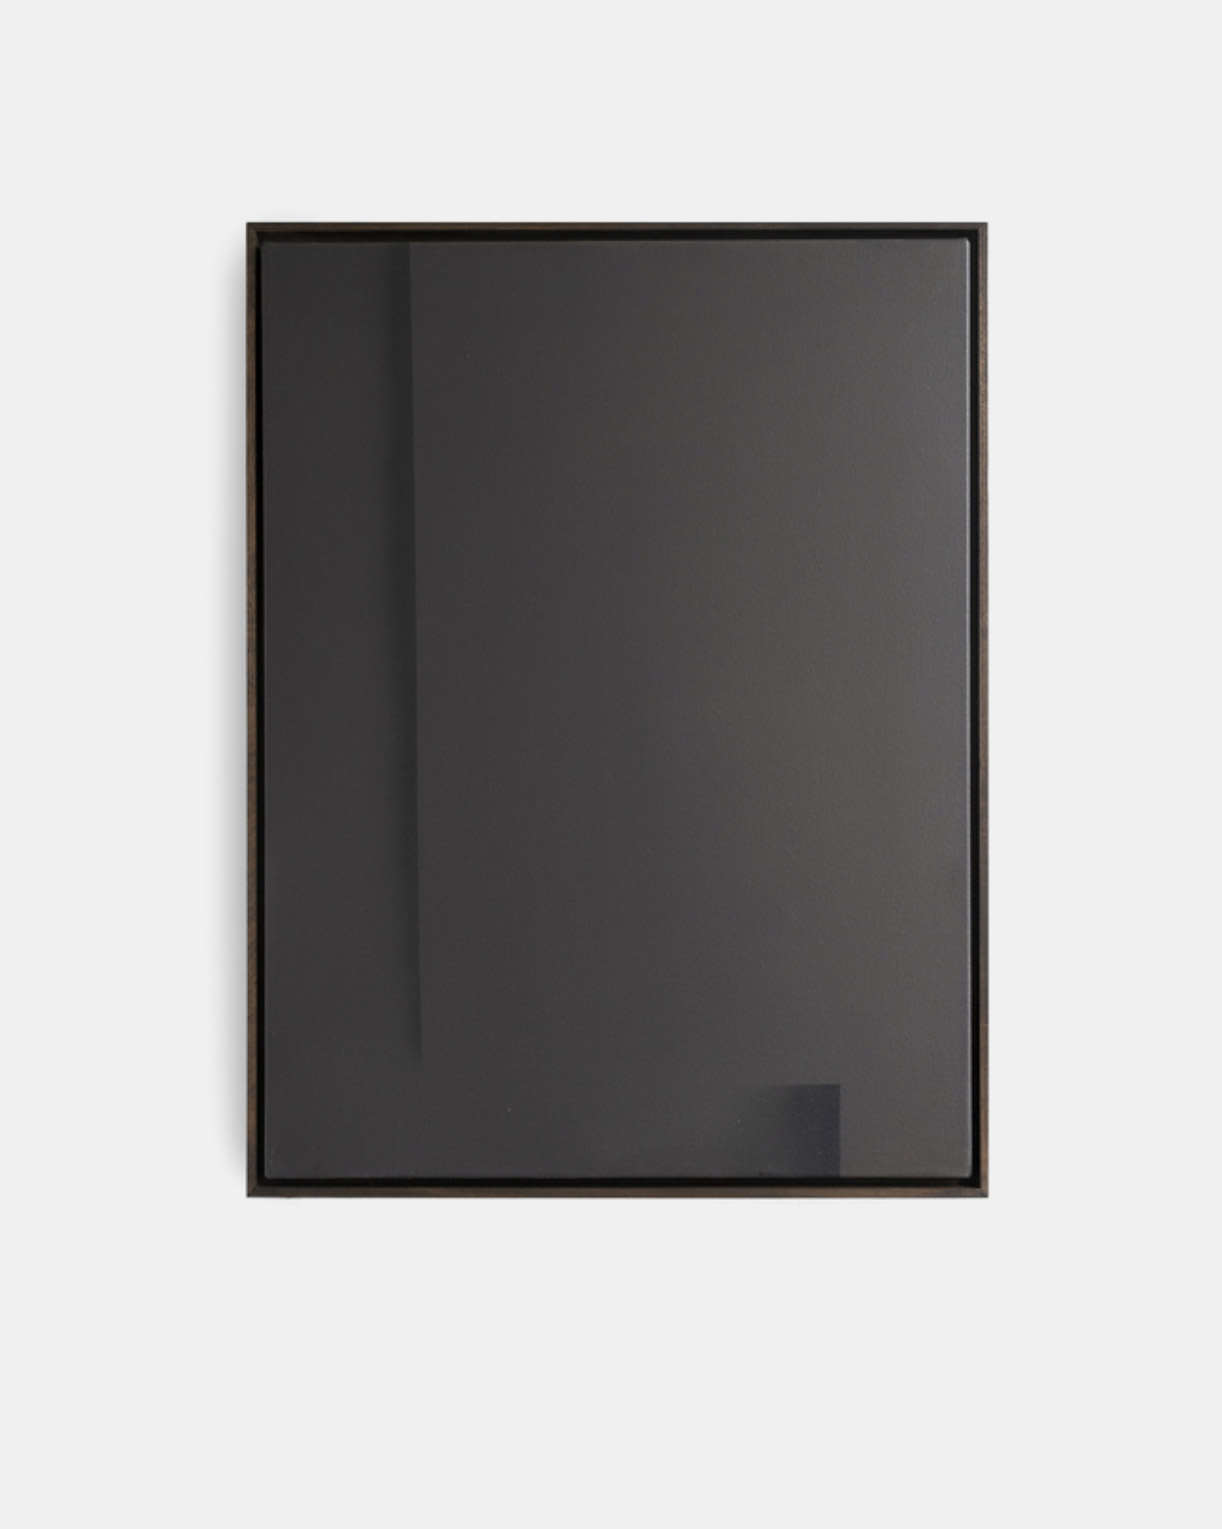 Tycjan Knut, light matters 29, 2021, Acrylic on canvas, 80 × 60 cm © The Artist, Image via Cadogan Gallery